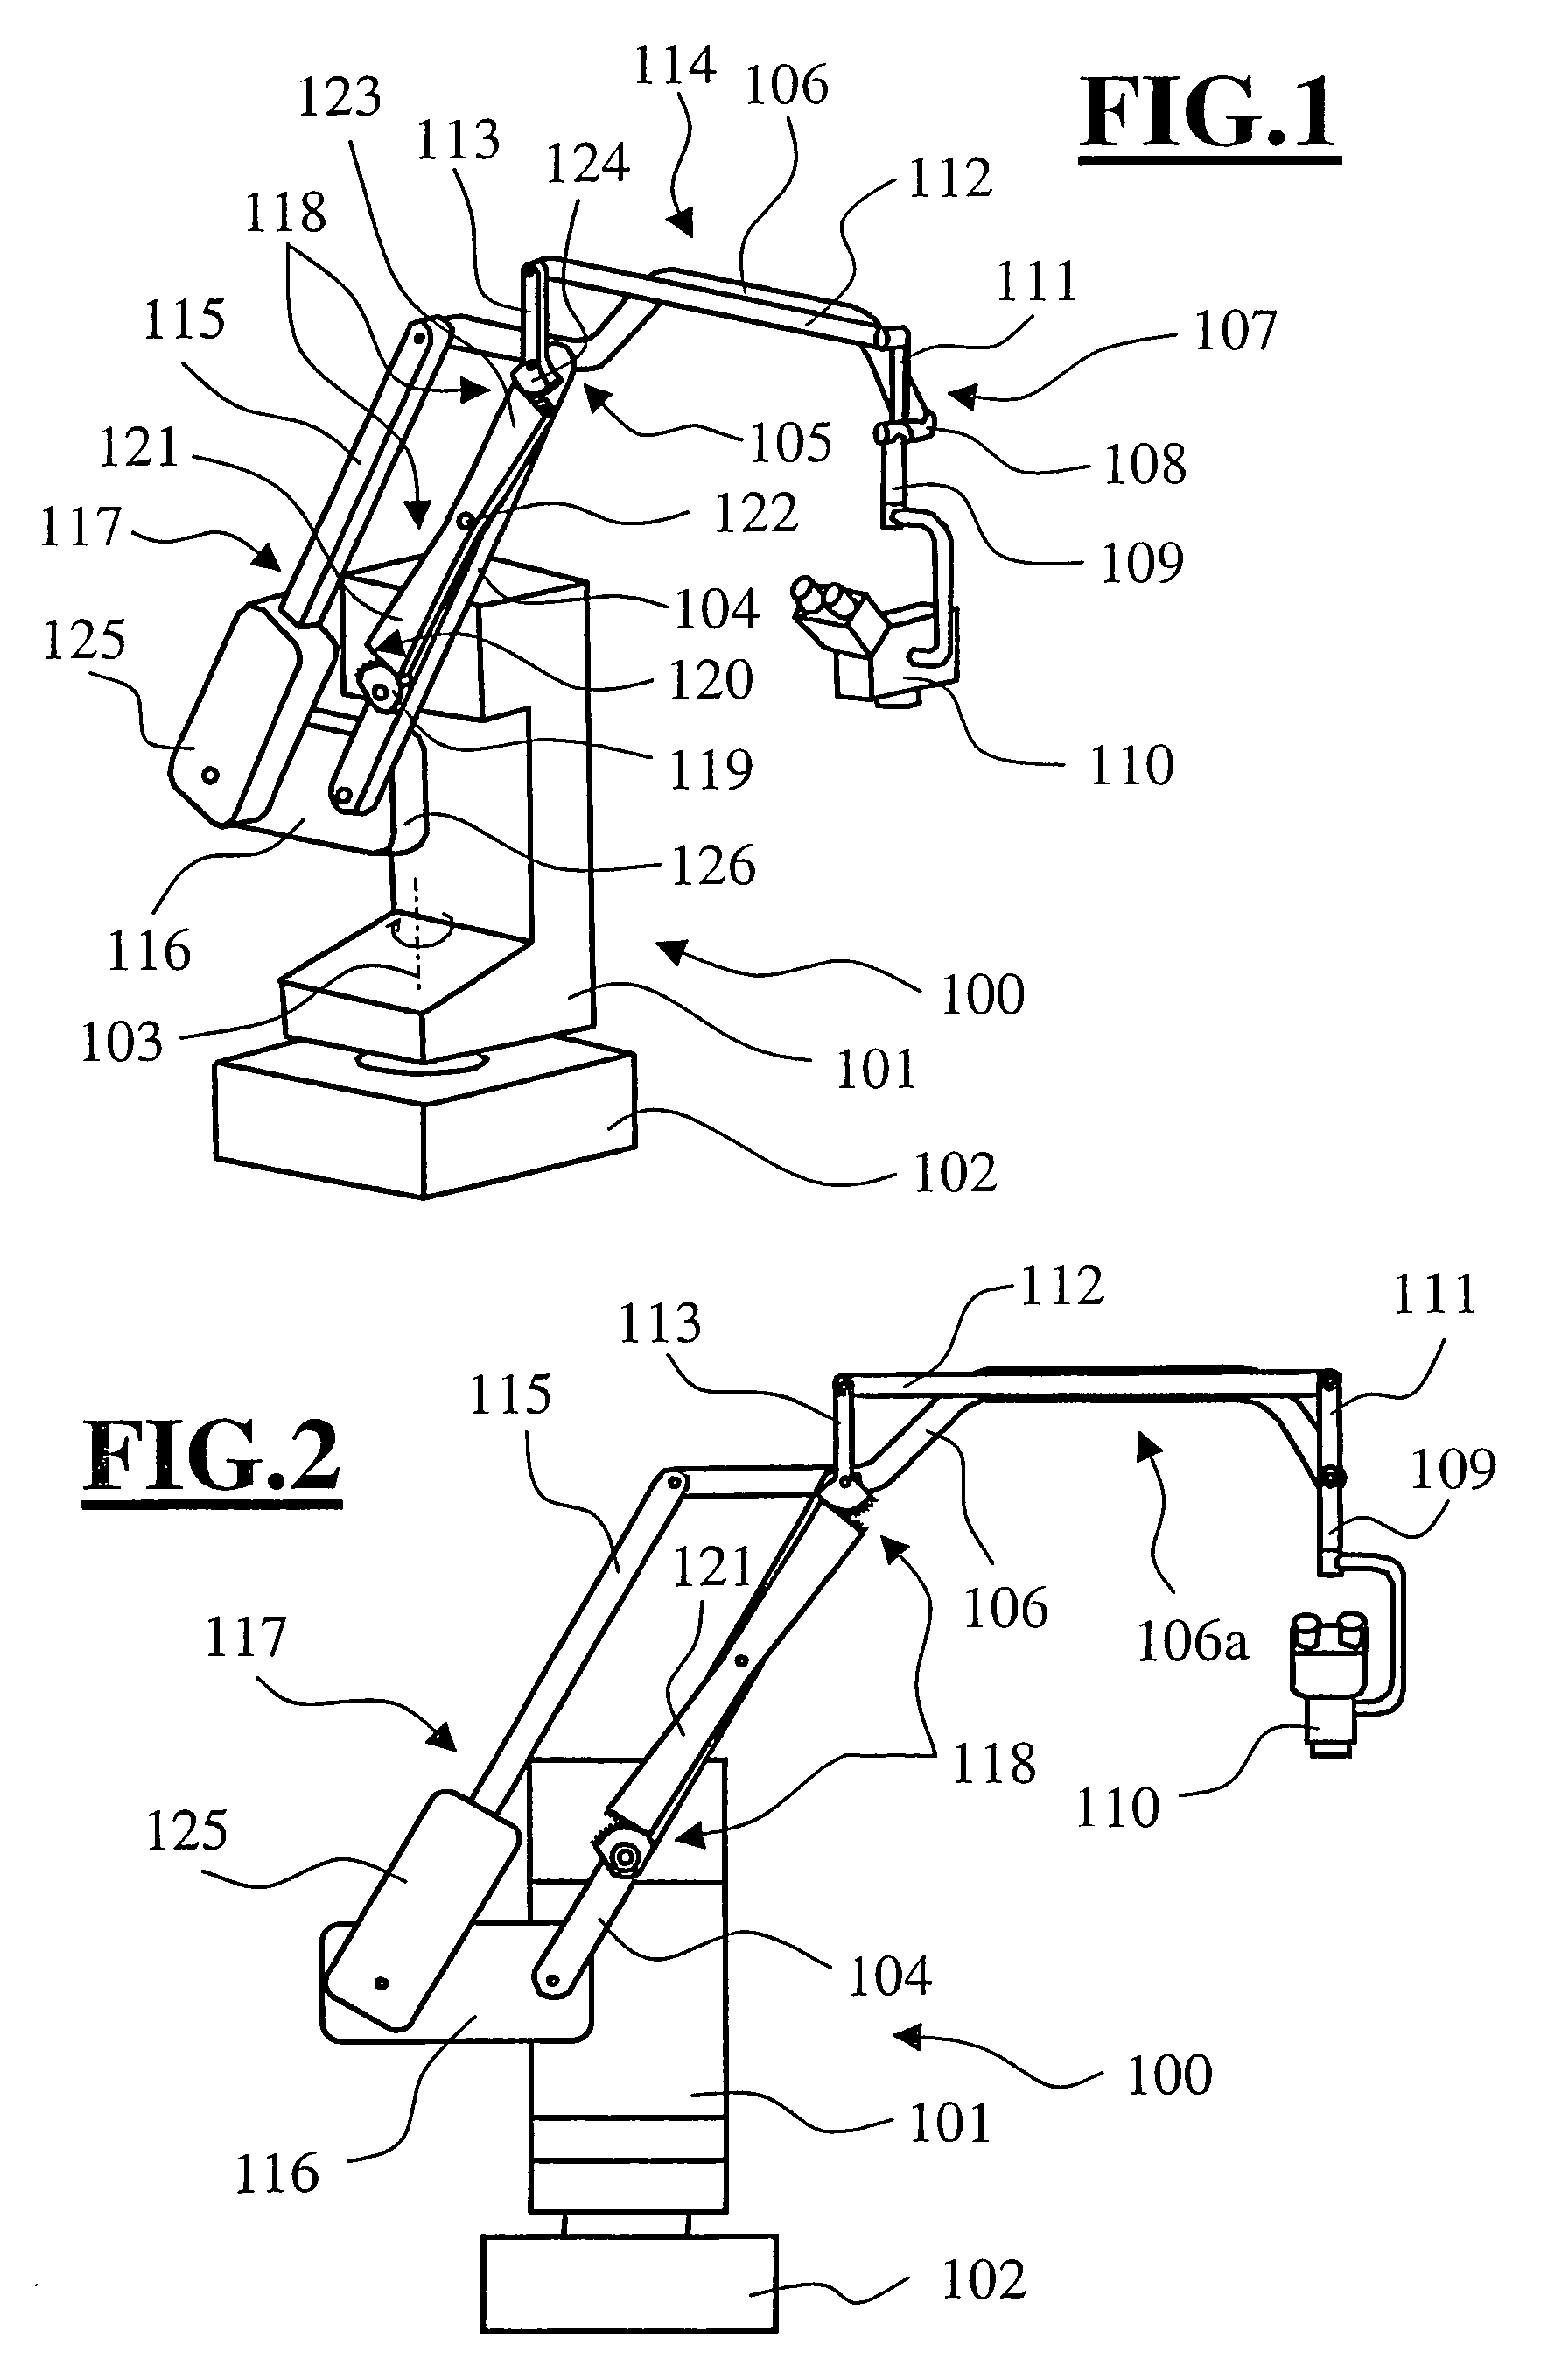 Stand arrangement for a medical-optical instrument